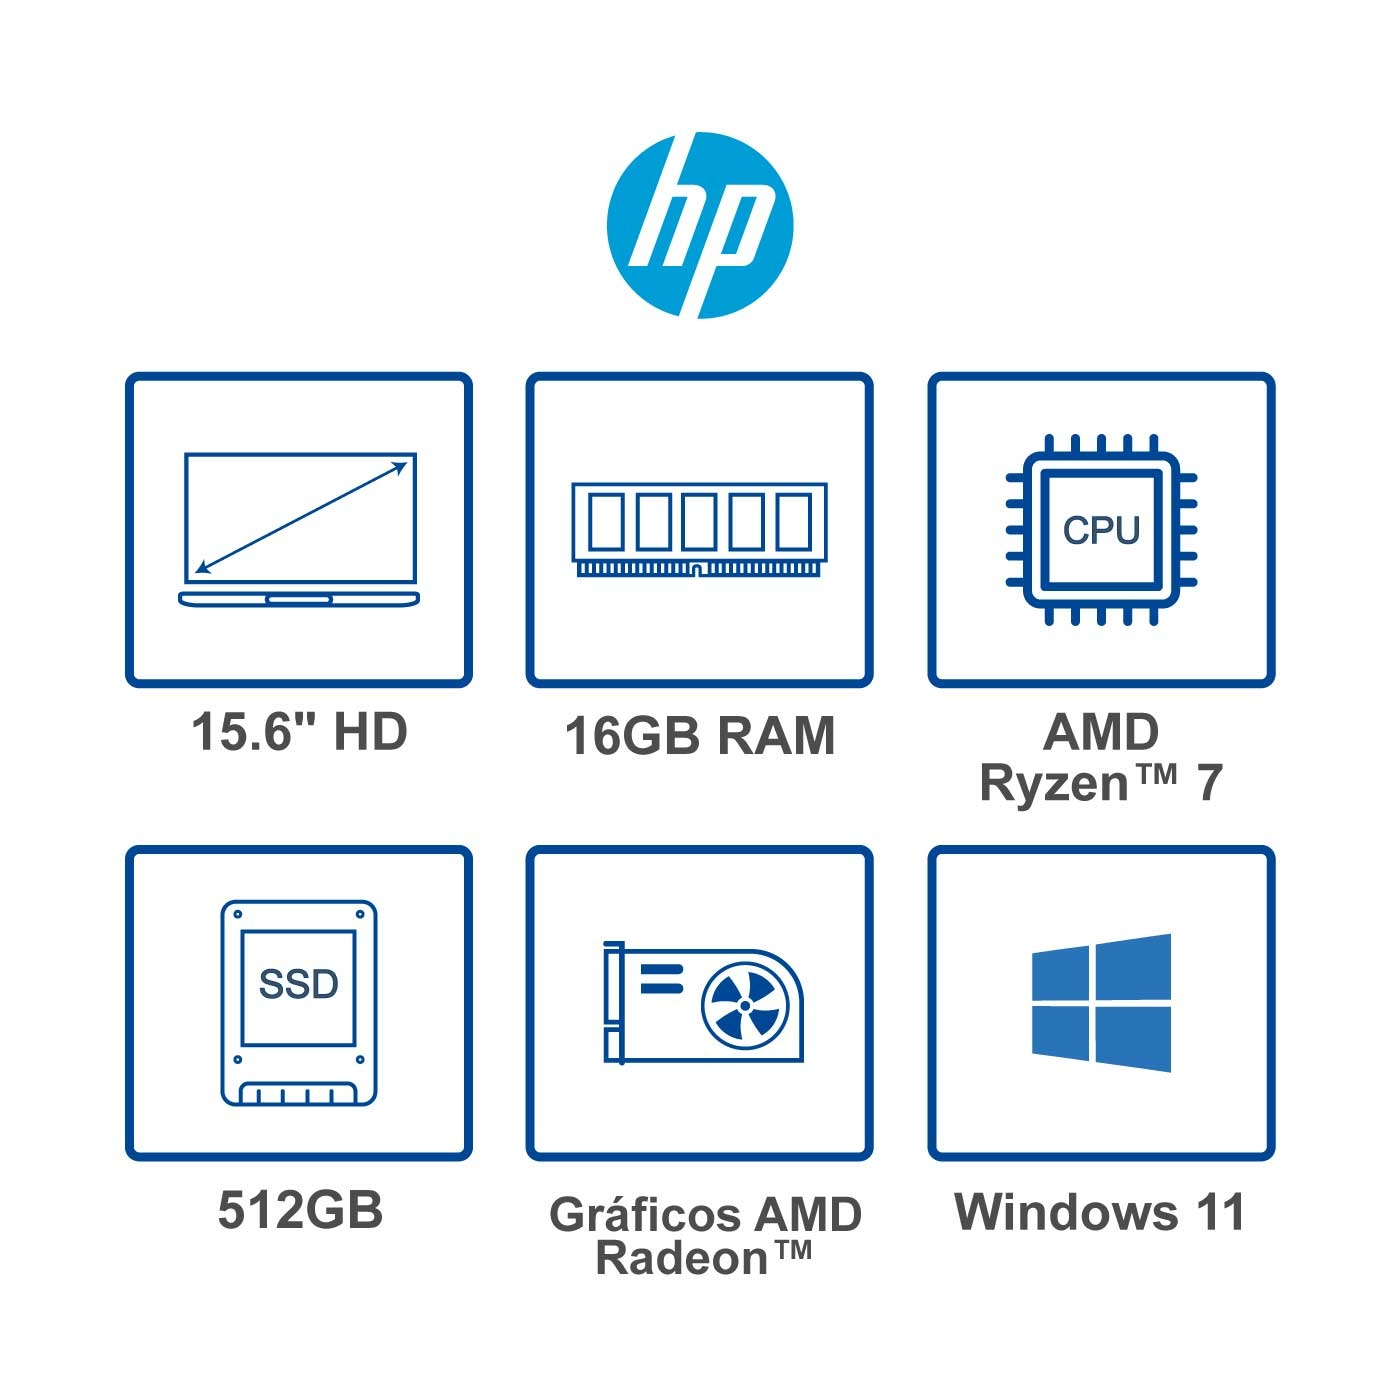 Computador Portátil HP 15.6" Pulgadas ef2500la - AMD Ryzen 7 - RAM 16GB - Disco SSD 512 GB - Dorado